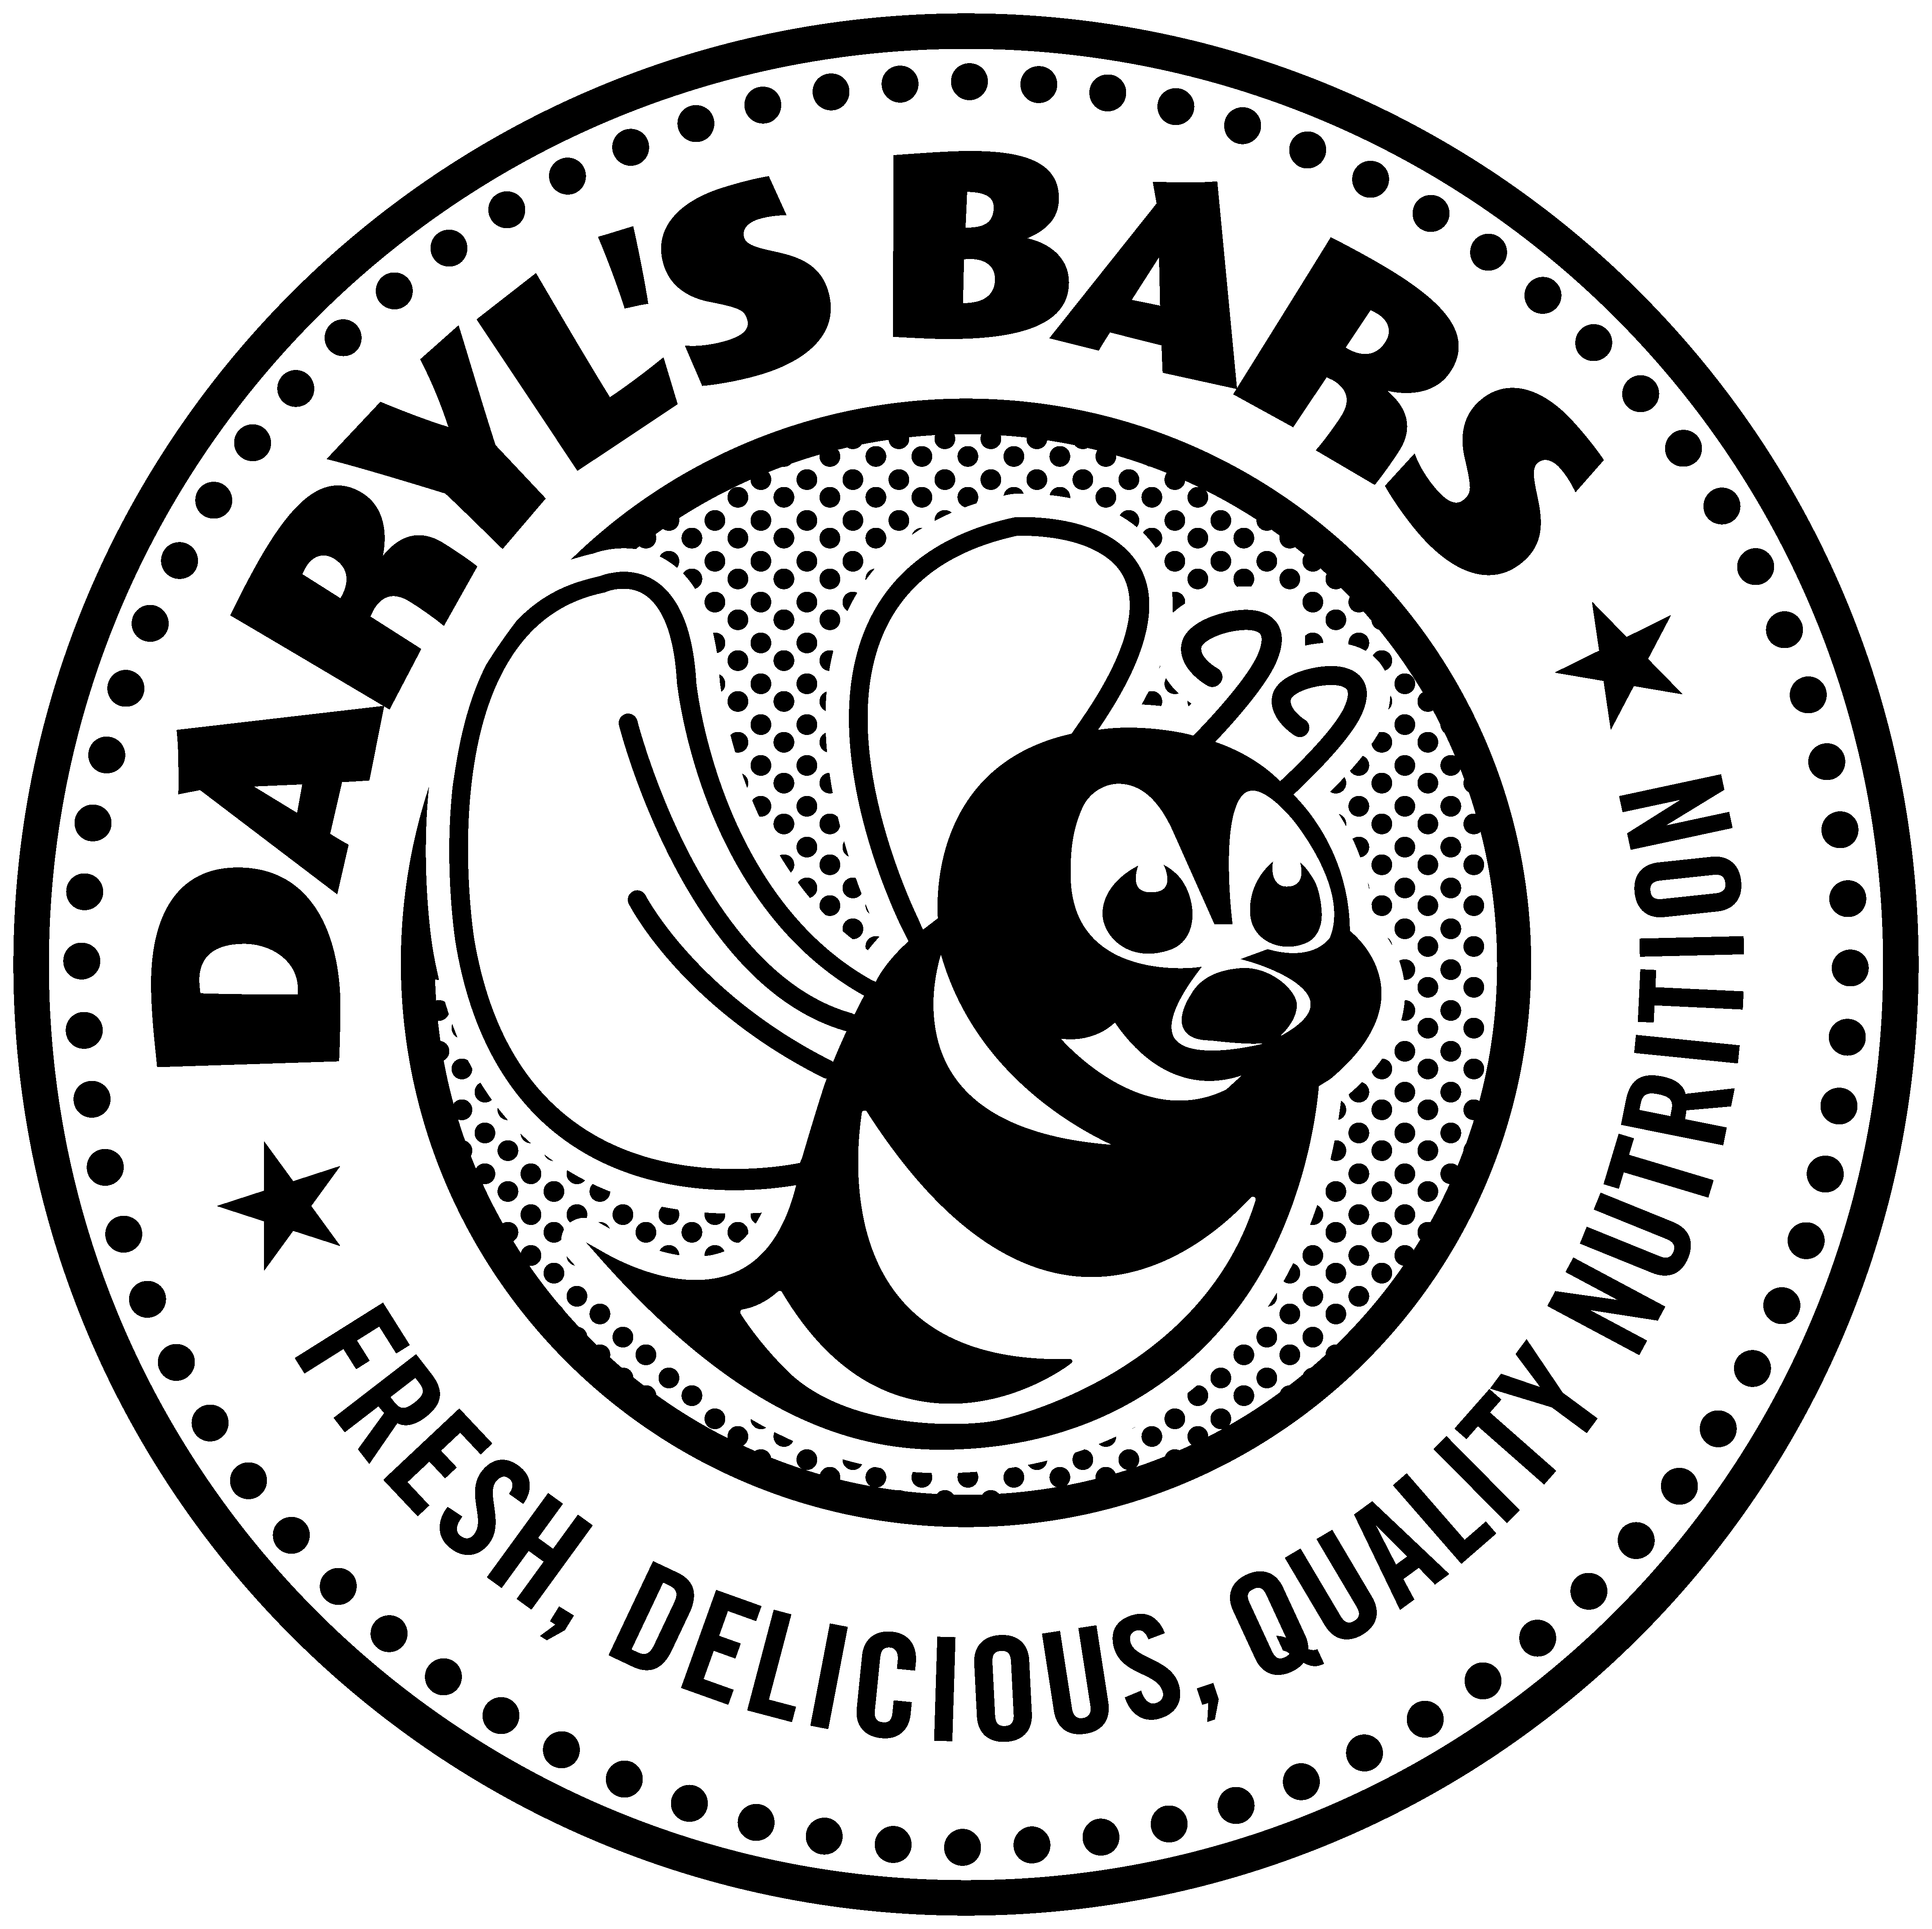 Daryl's Bars